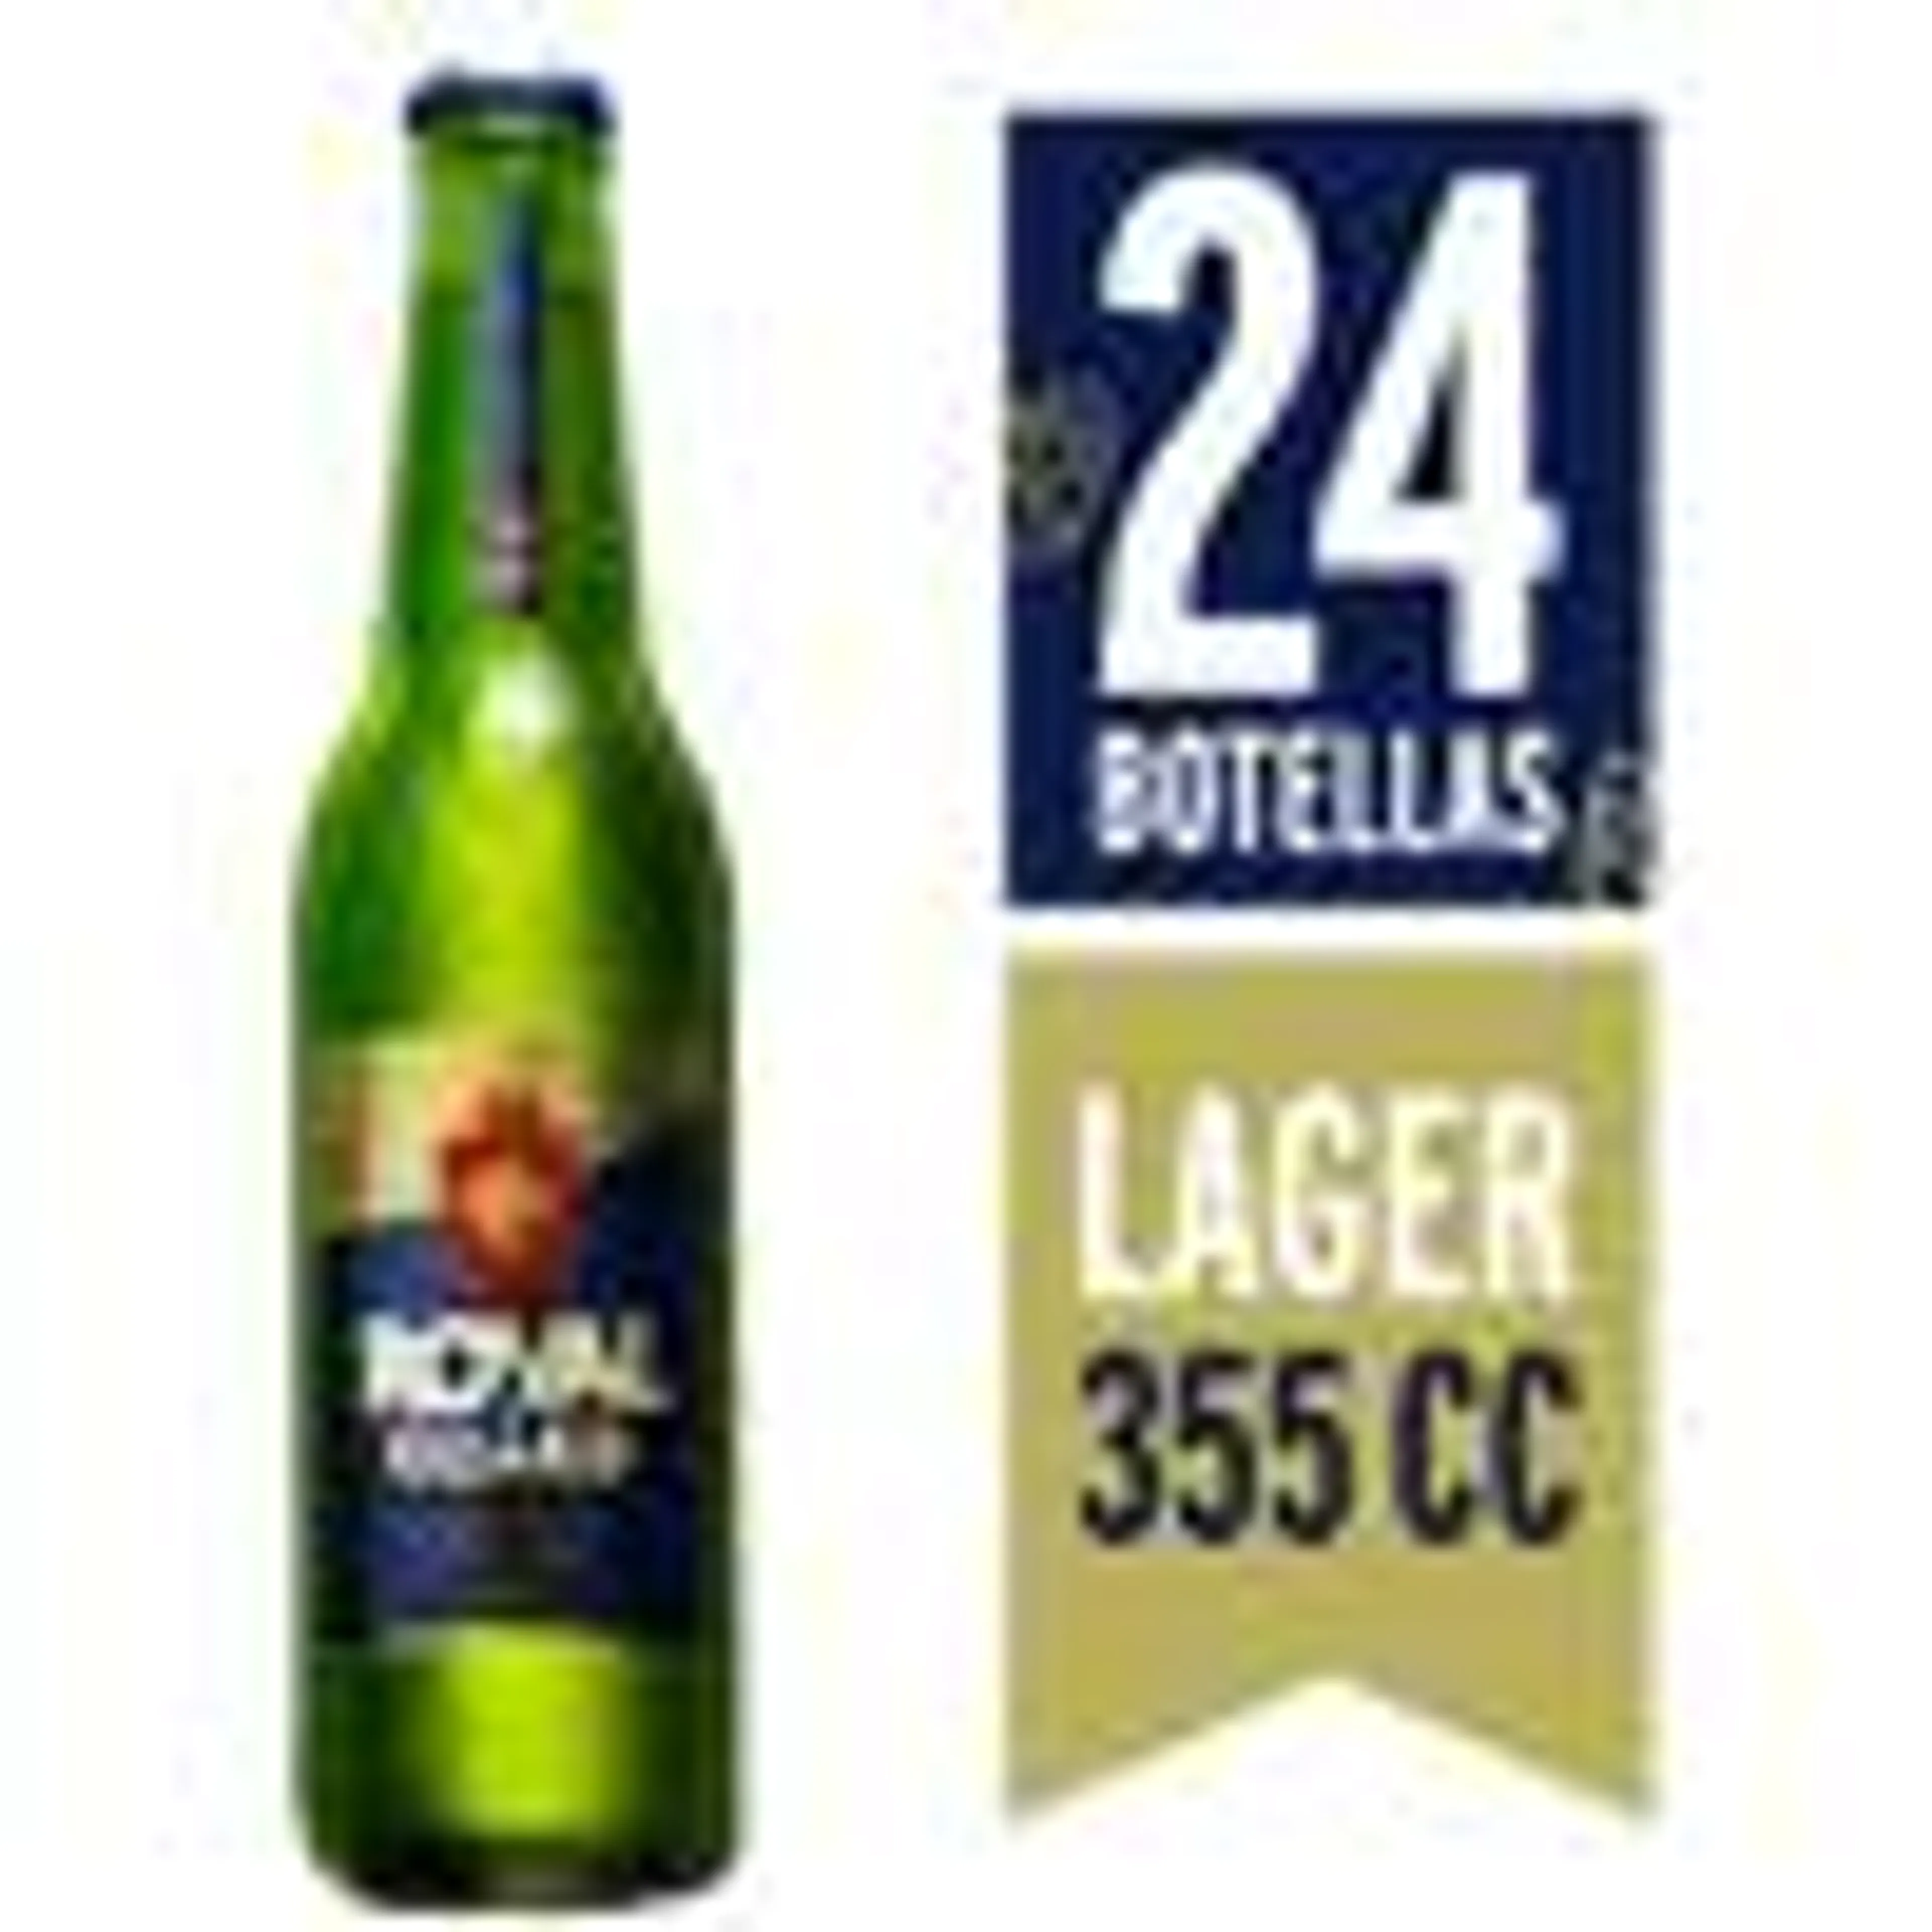 Pack 24 un. Cerveza Royal Guard 5.0° 355 cc